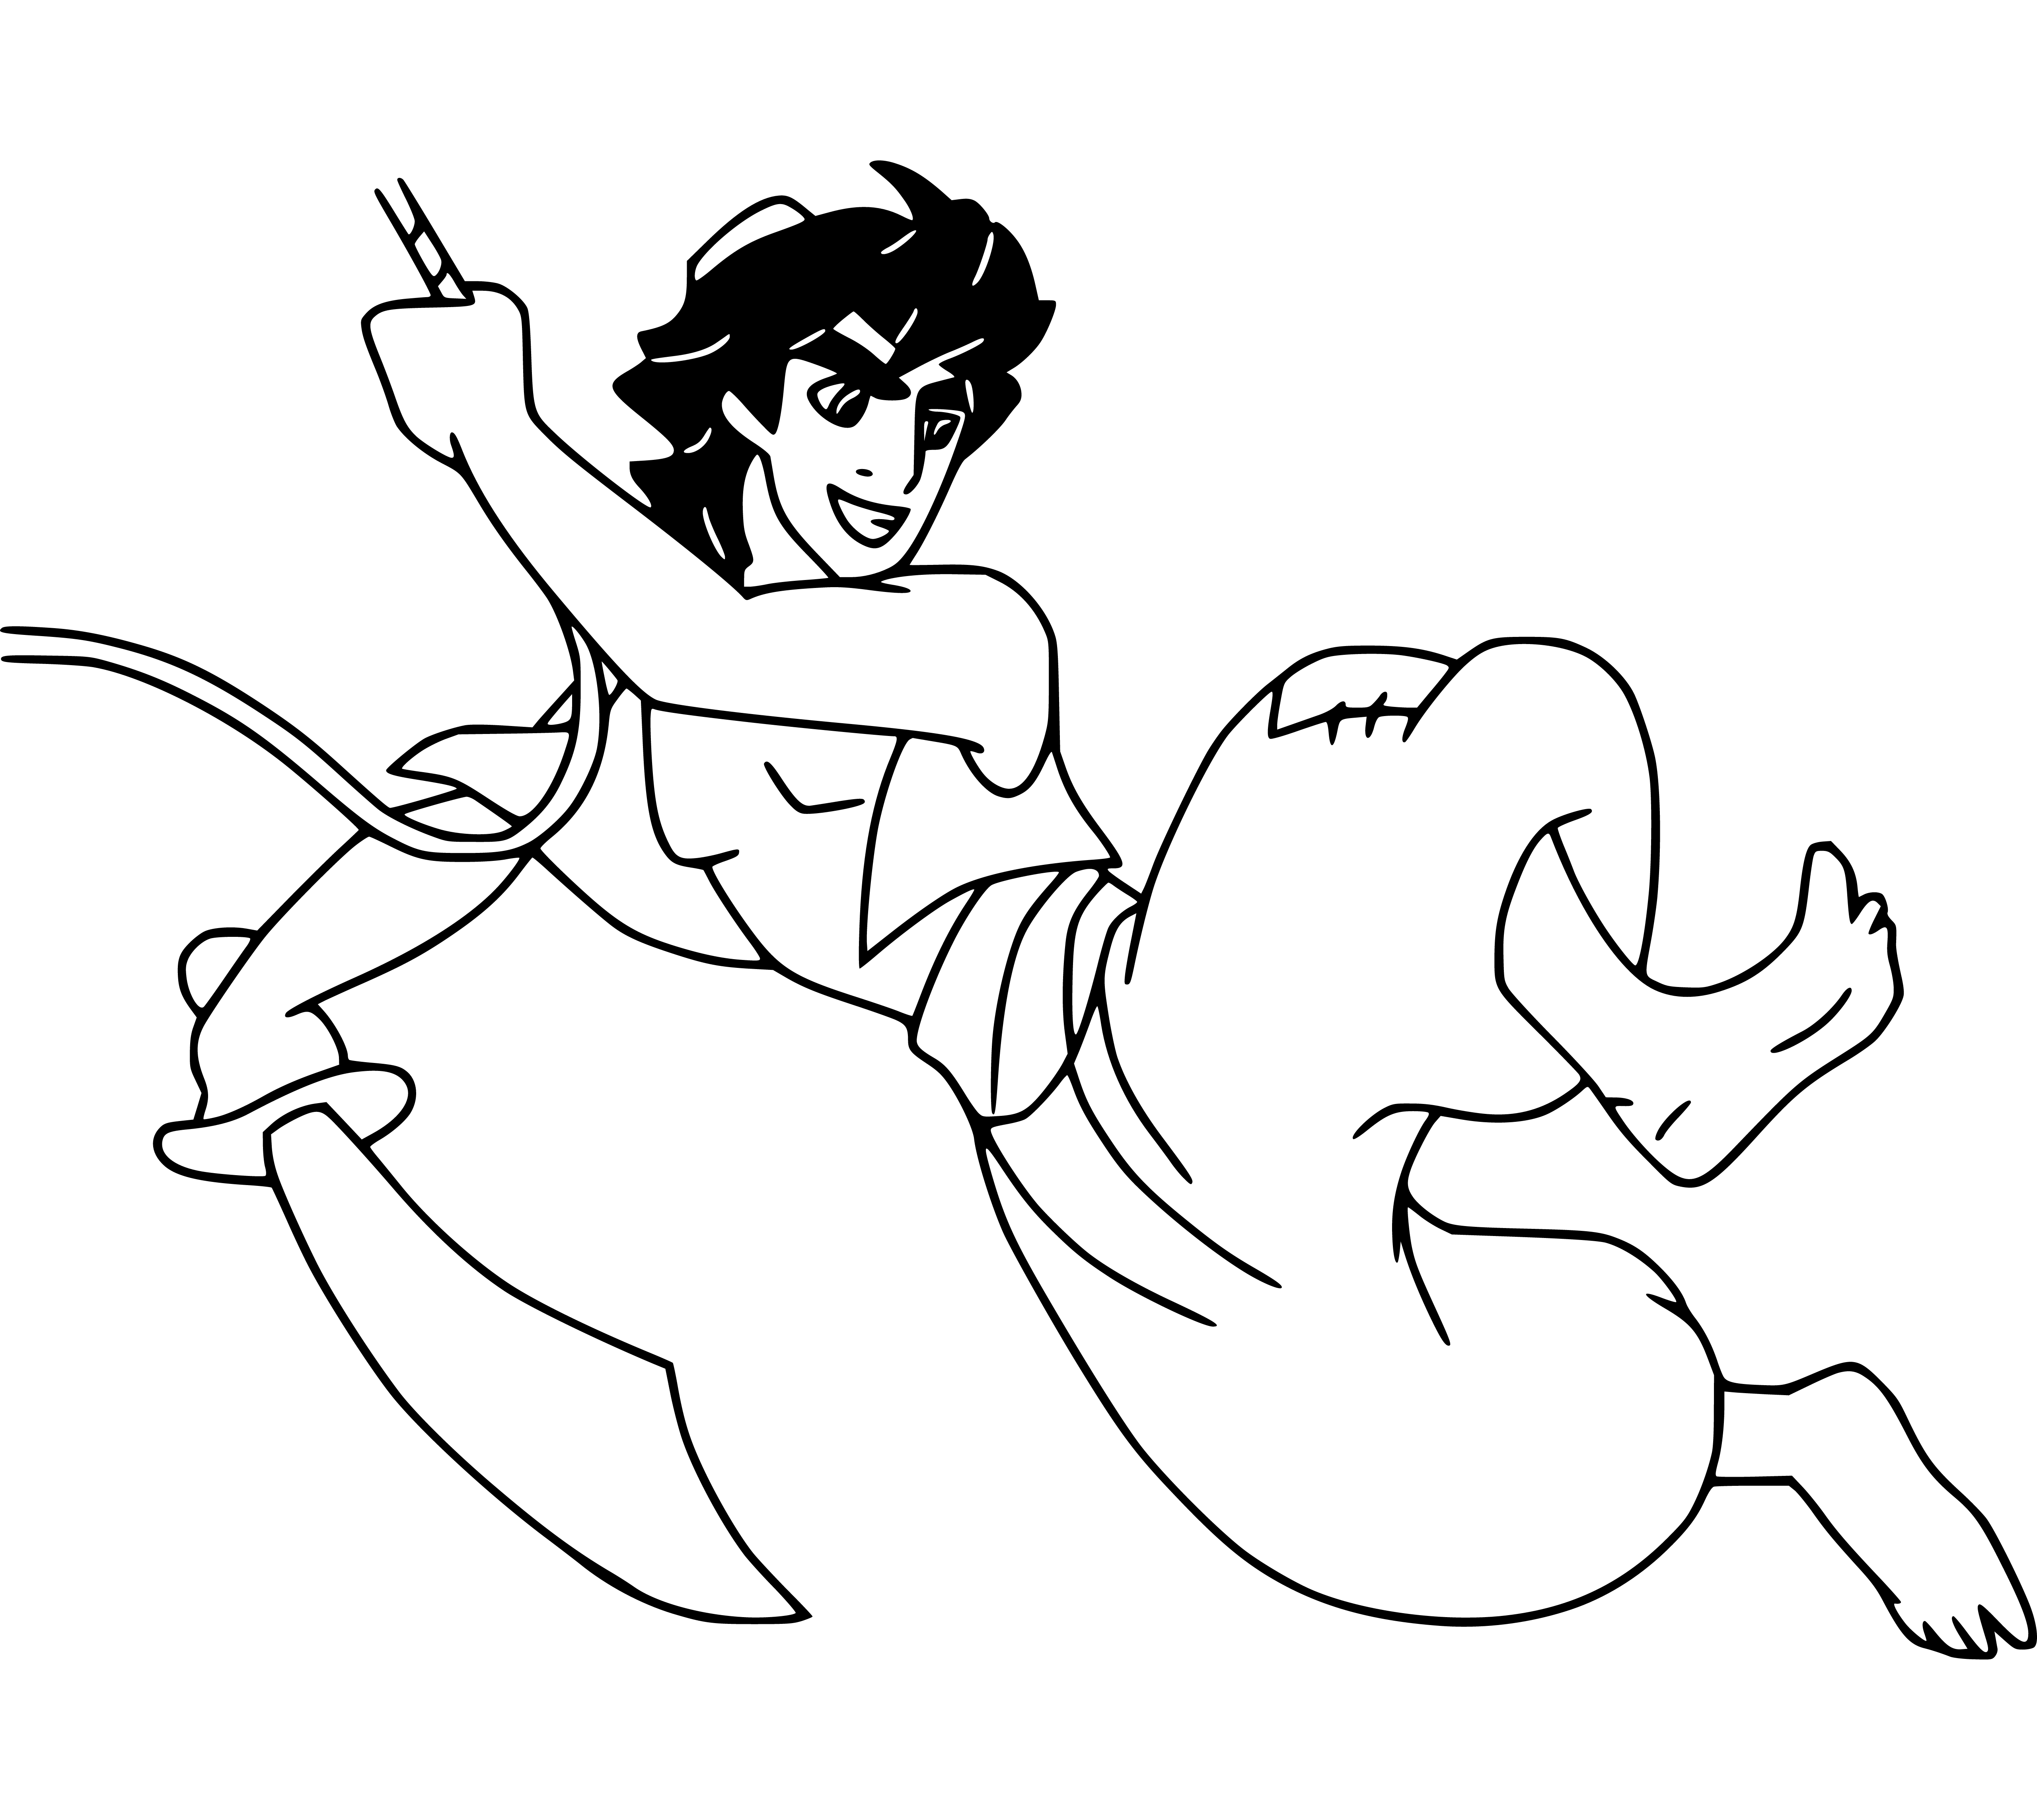 Aladdin jumping Coloring Sheet - SheetalColor.com